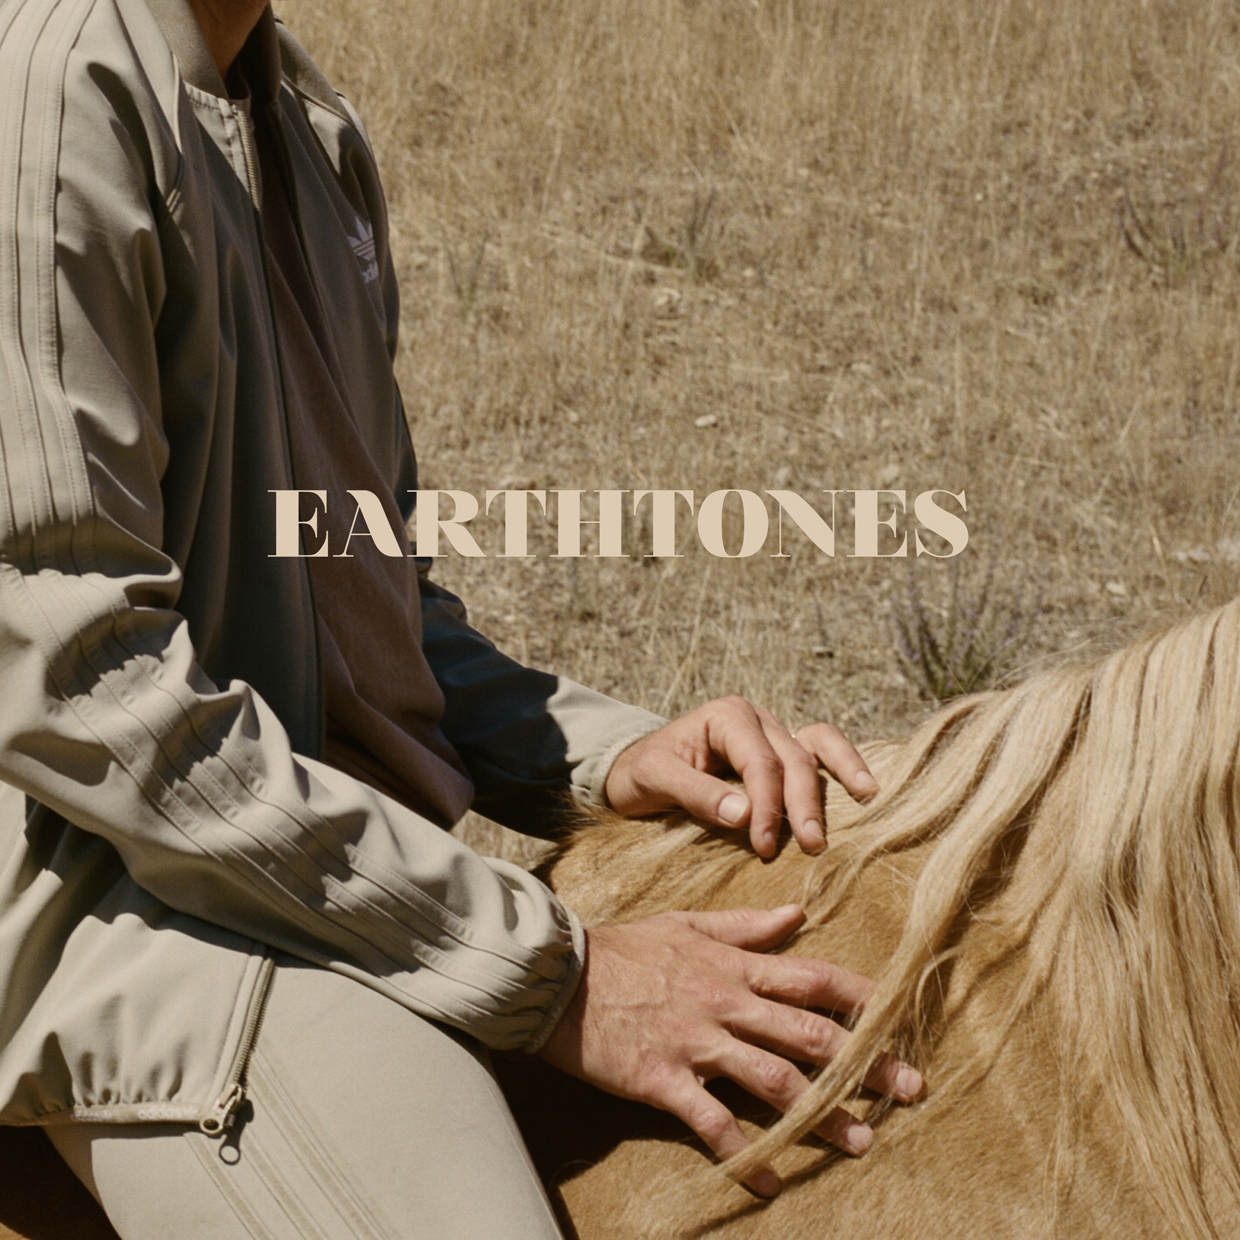 'Earthtones' by Bahamas album review